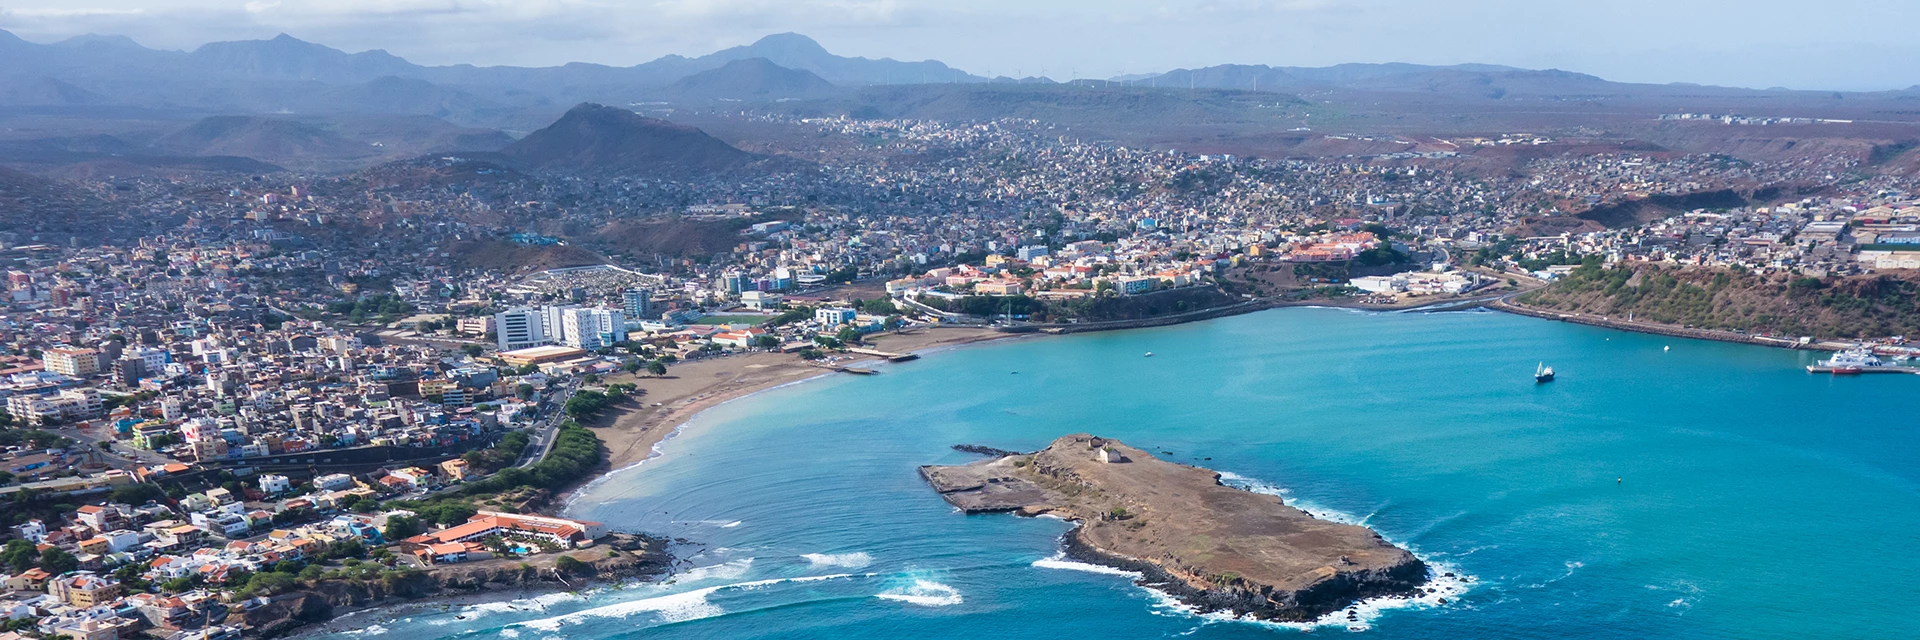 Praia Santiago Cape Verde Islands